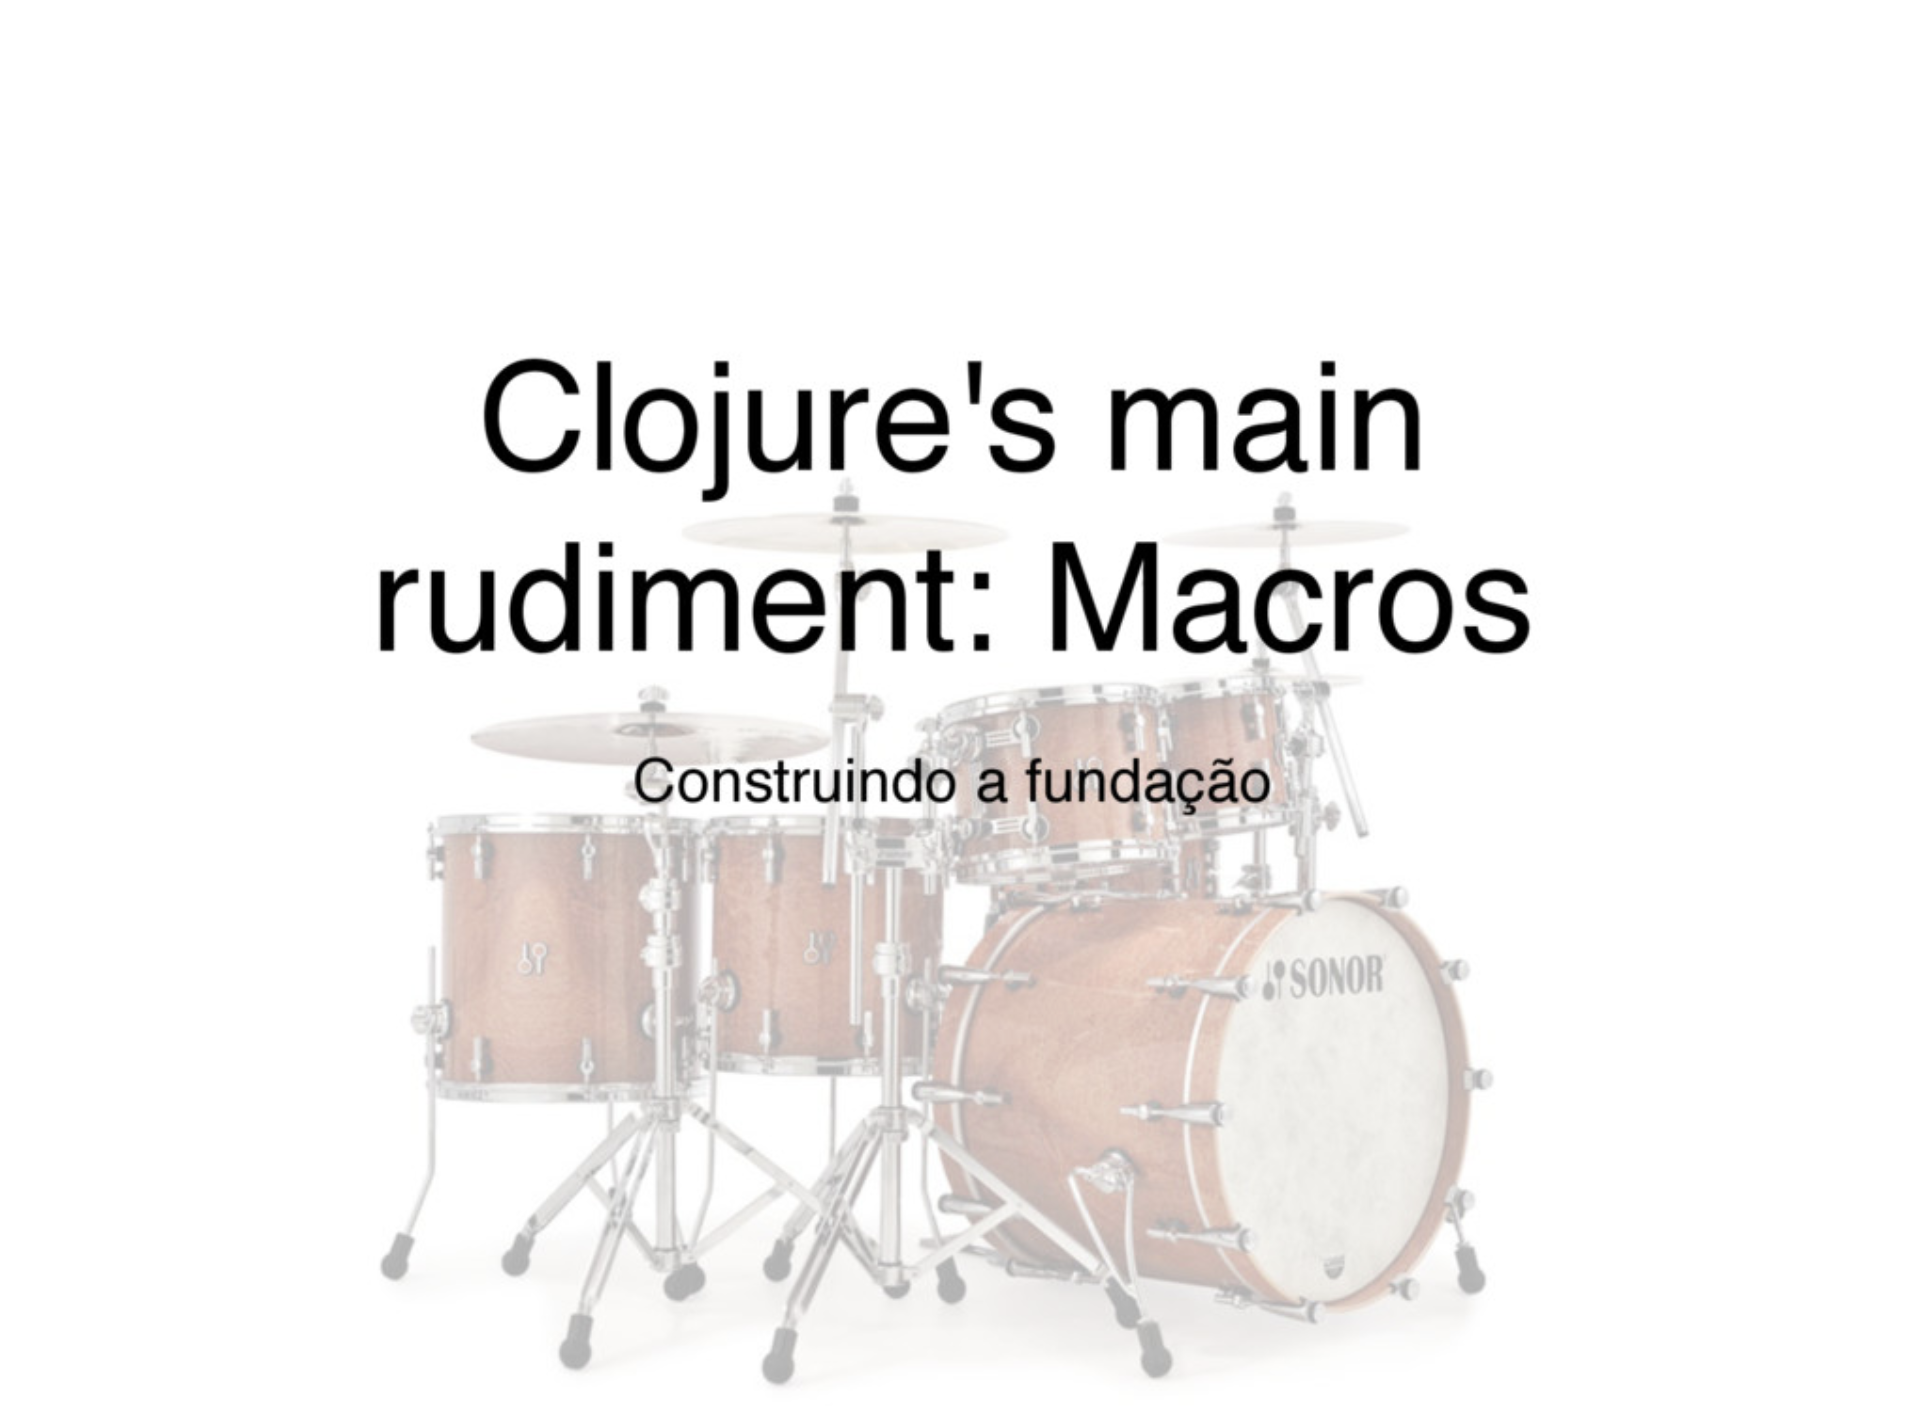 Clojure's main rudiment: macros - building the foundation